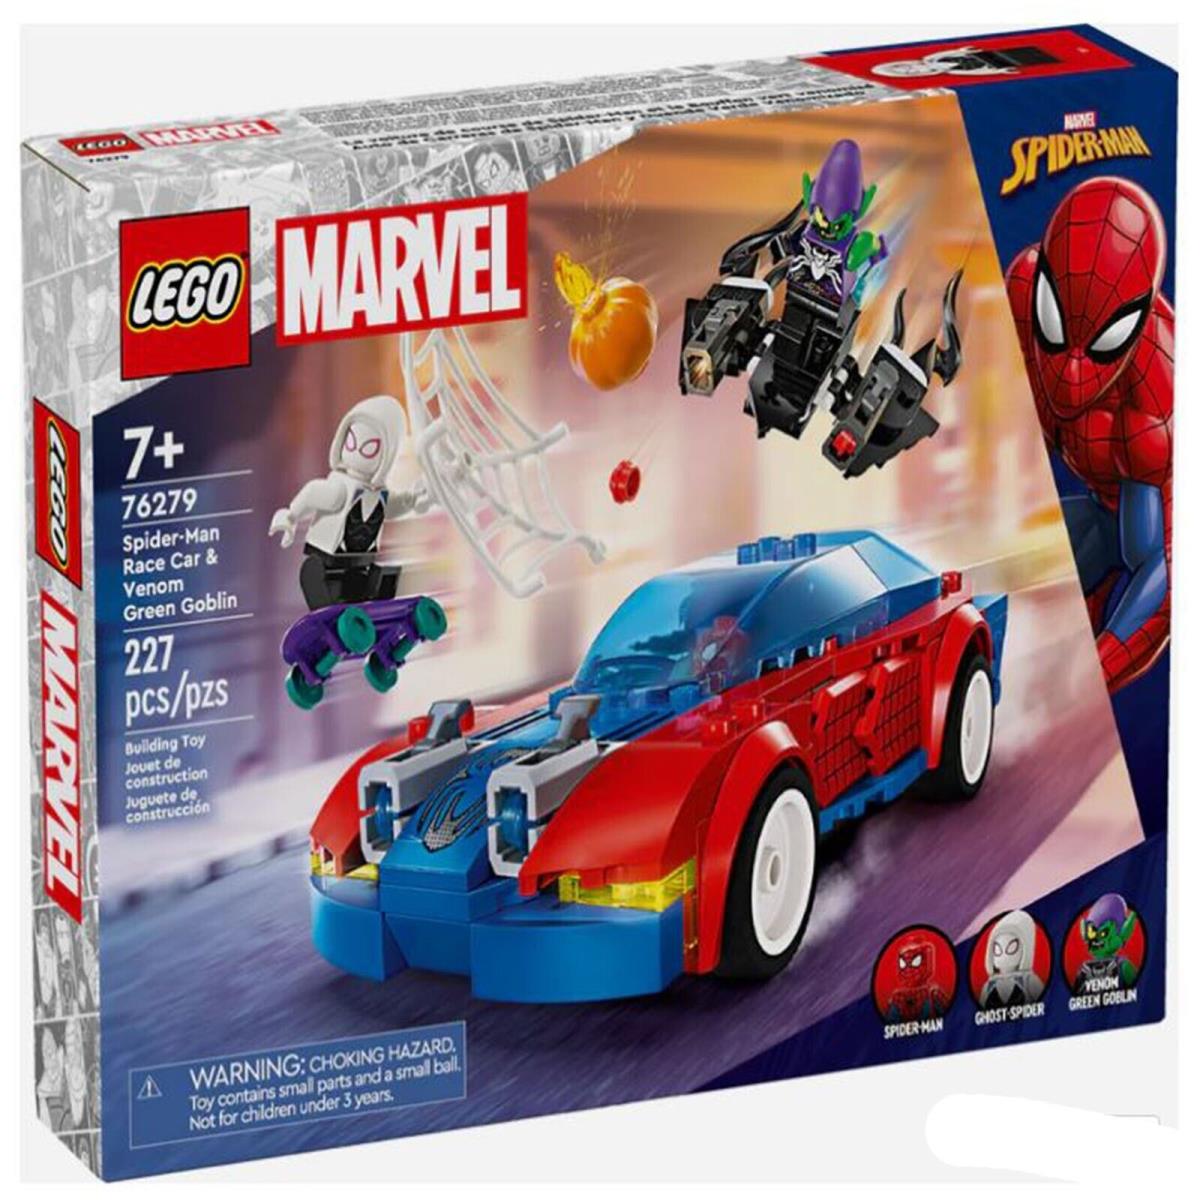 Lego Marvel Spider-man Race Car and Venom Green Goblin Building Set 76279 - Green